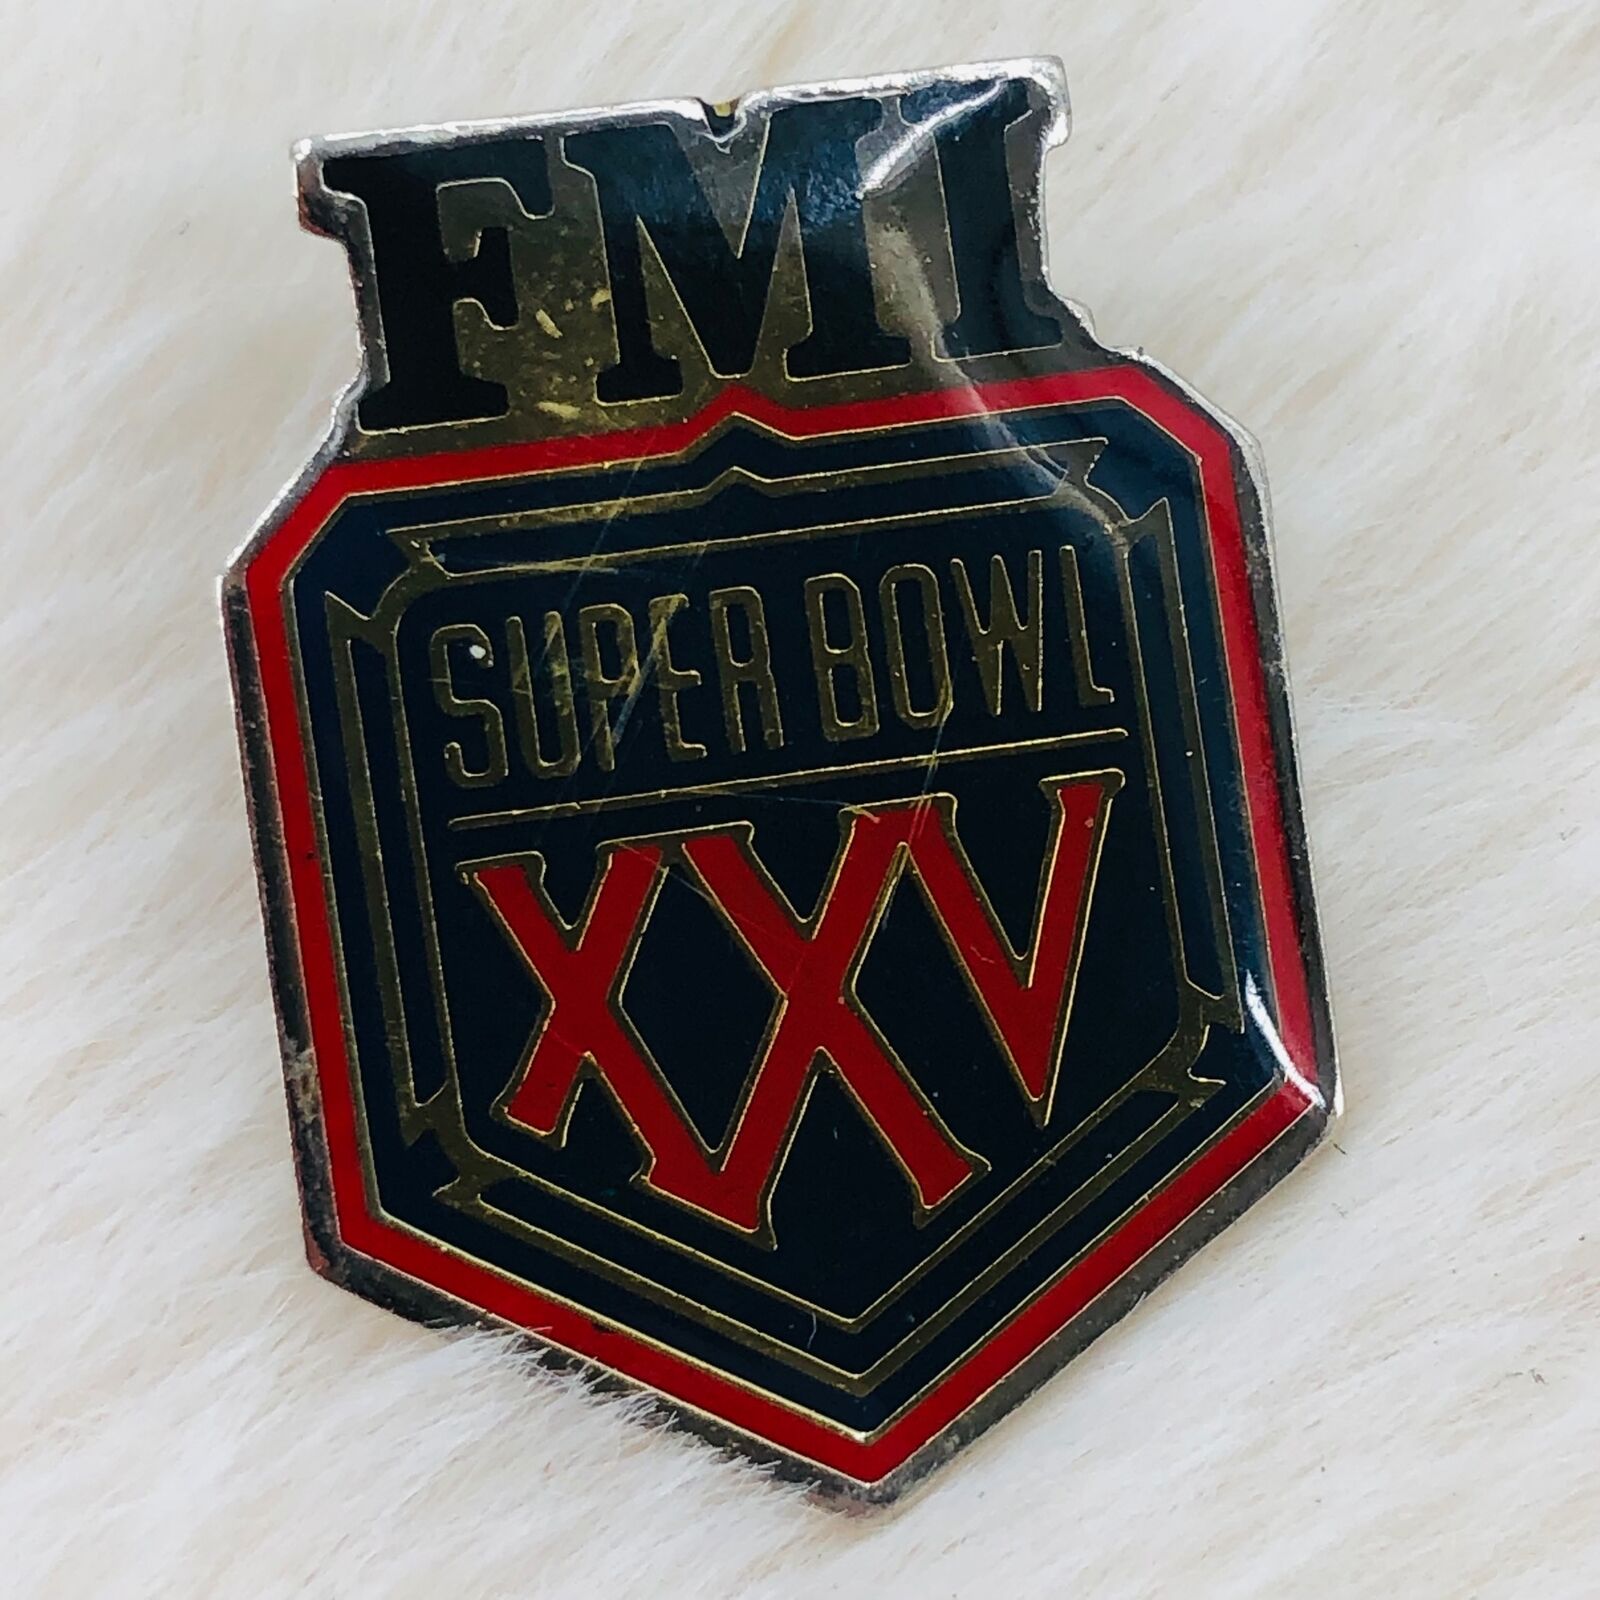 Vtg Super Bowl XXV FMI Sponsored NFL Football Lapel Pin by Peter David